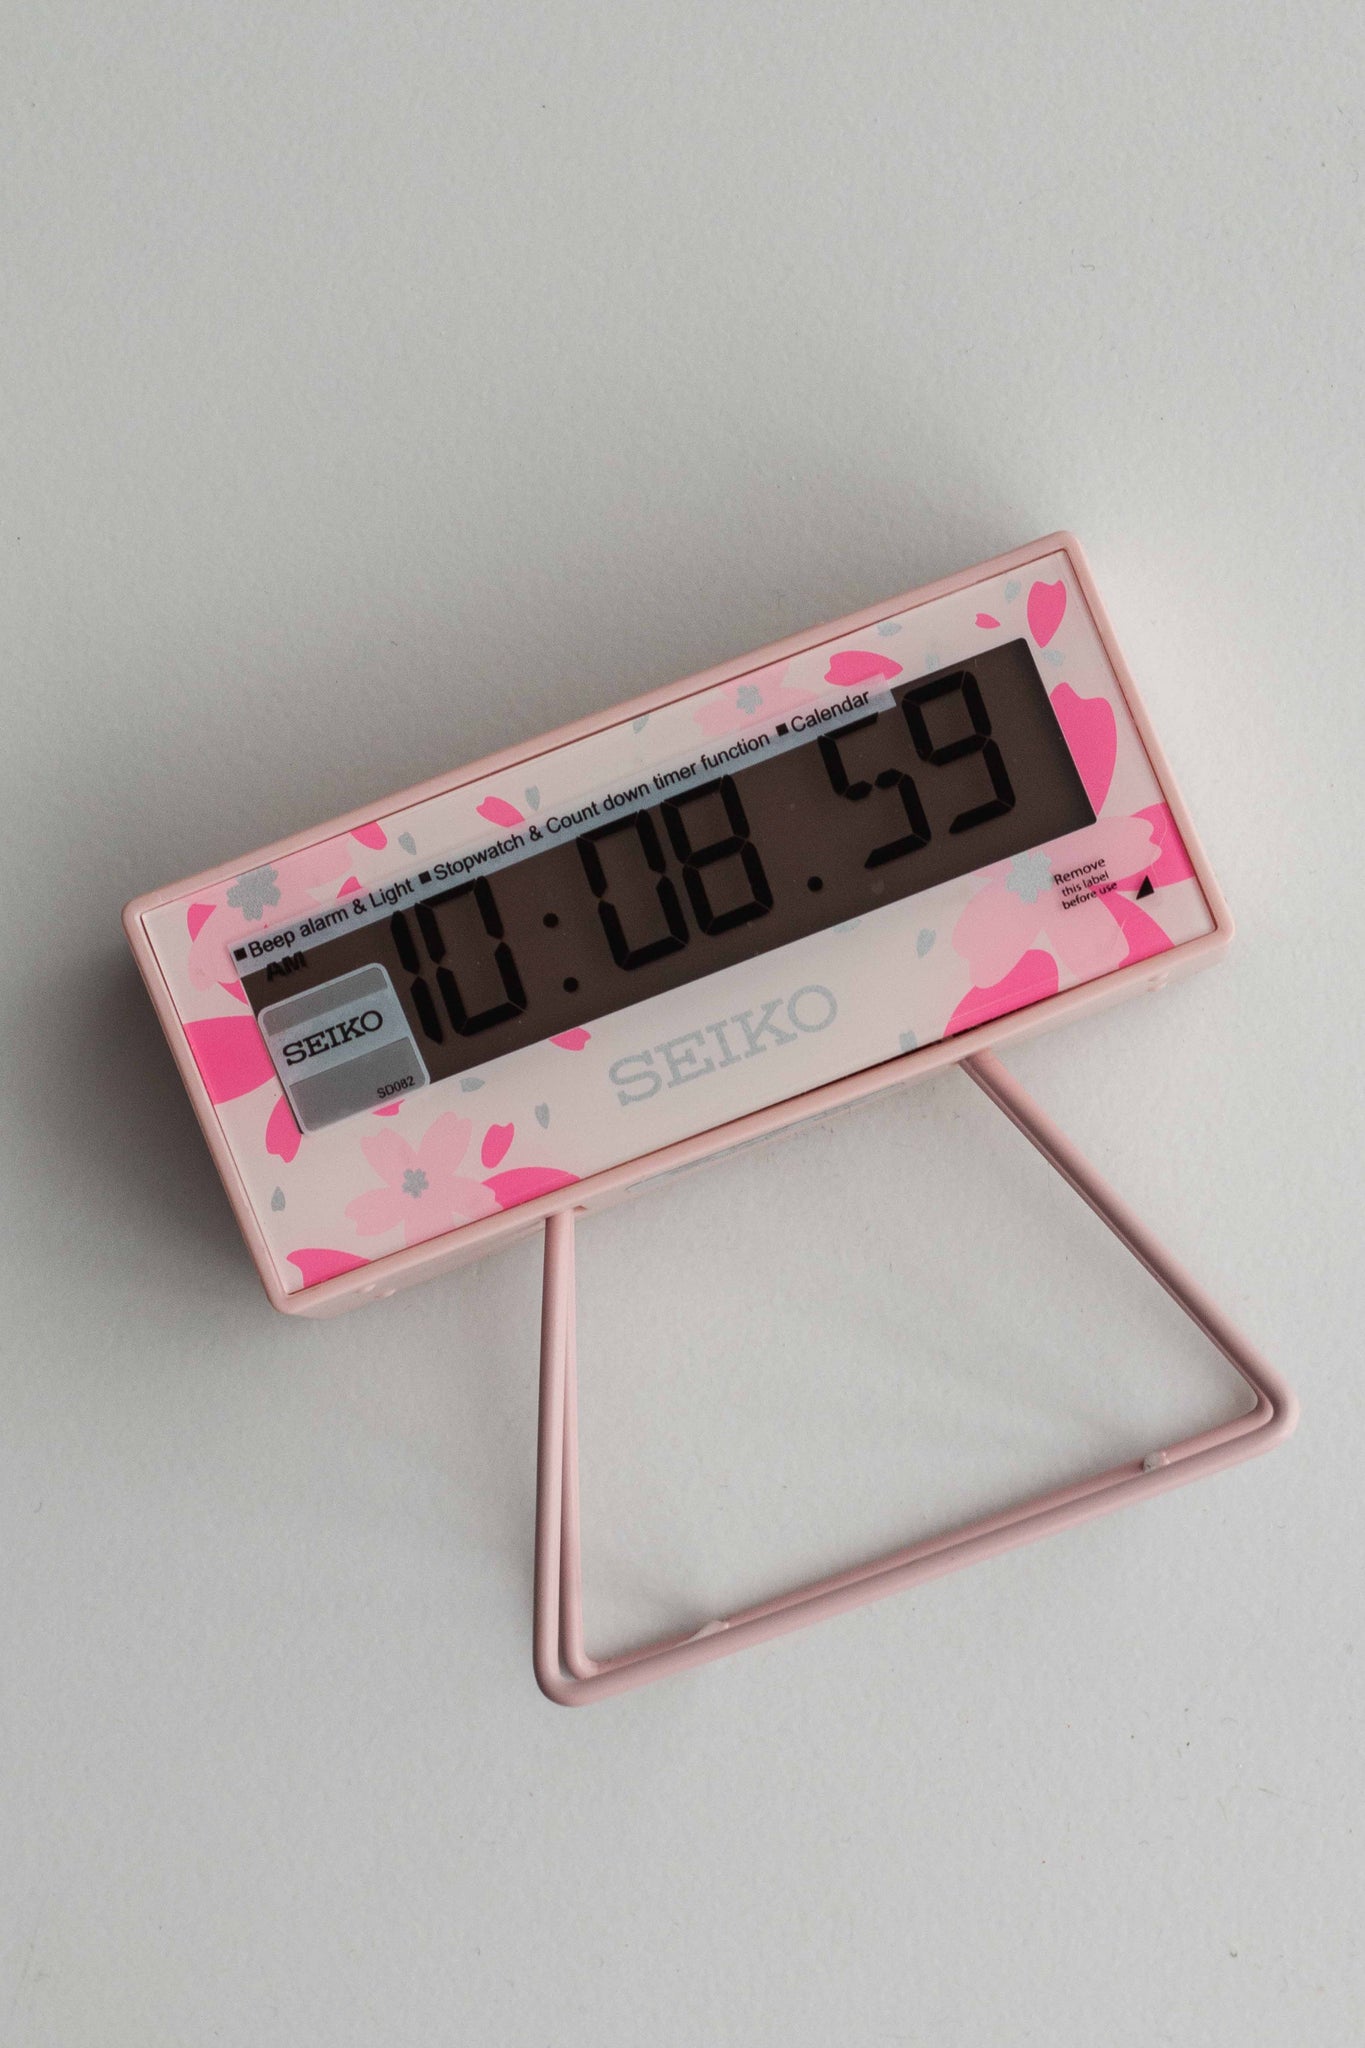 Seiko Pink Limited Edition Marathon Alarm Clock "Cherry Blossom" Ref. QHL082P